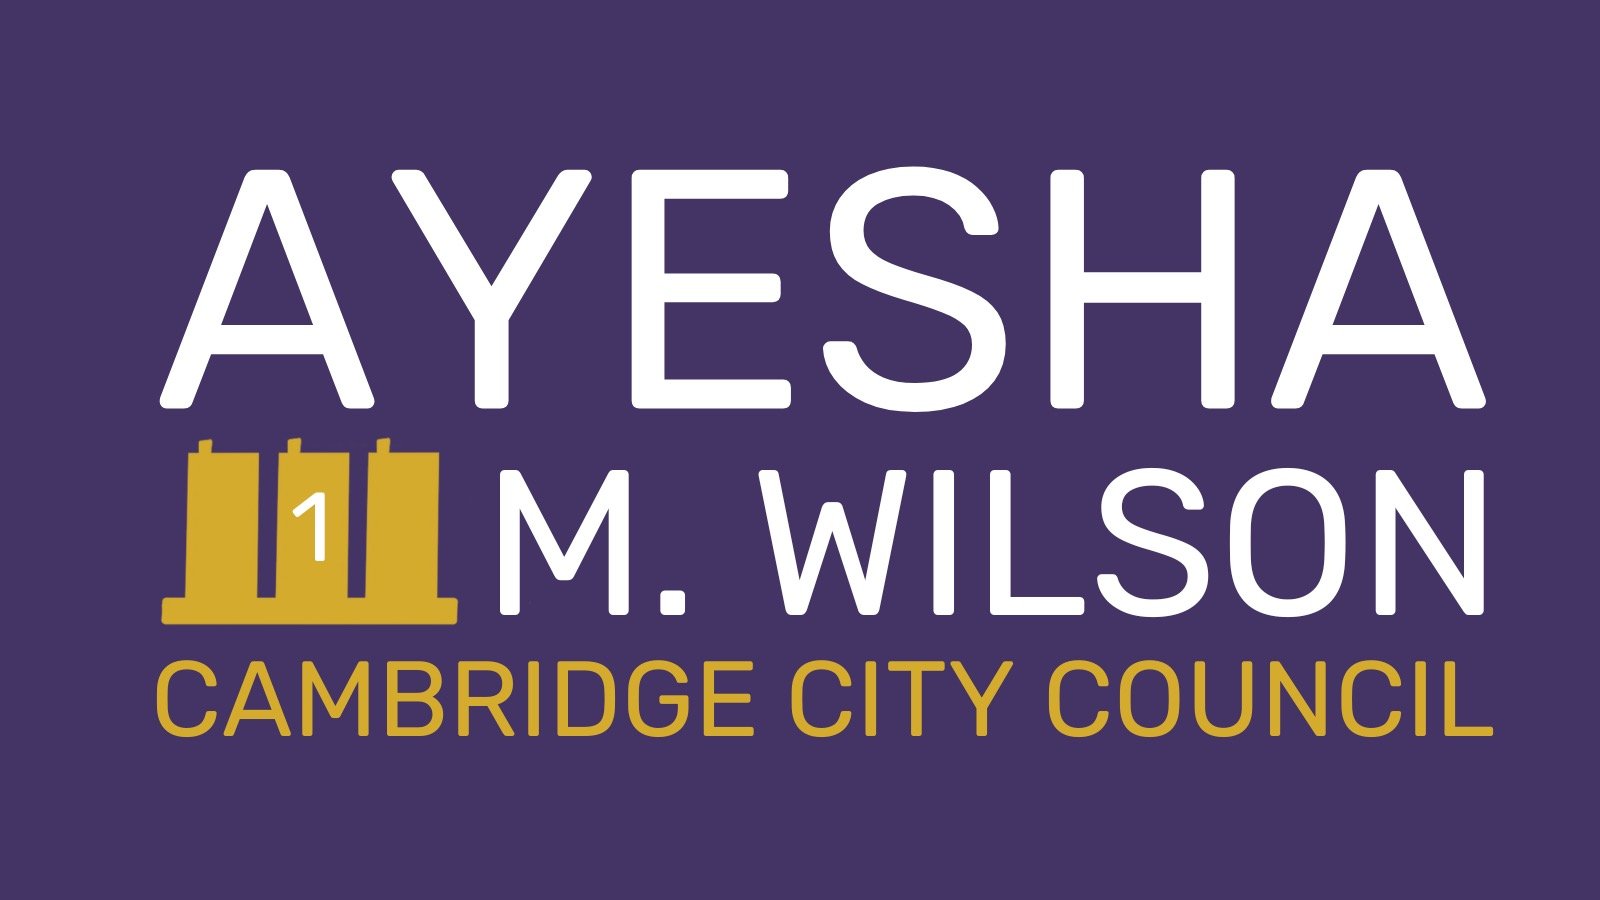 Ayesha M. Wilson for Cambridge City Council